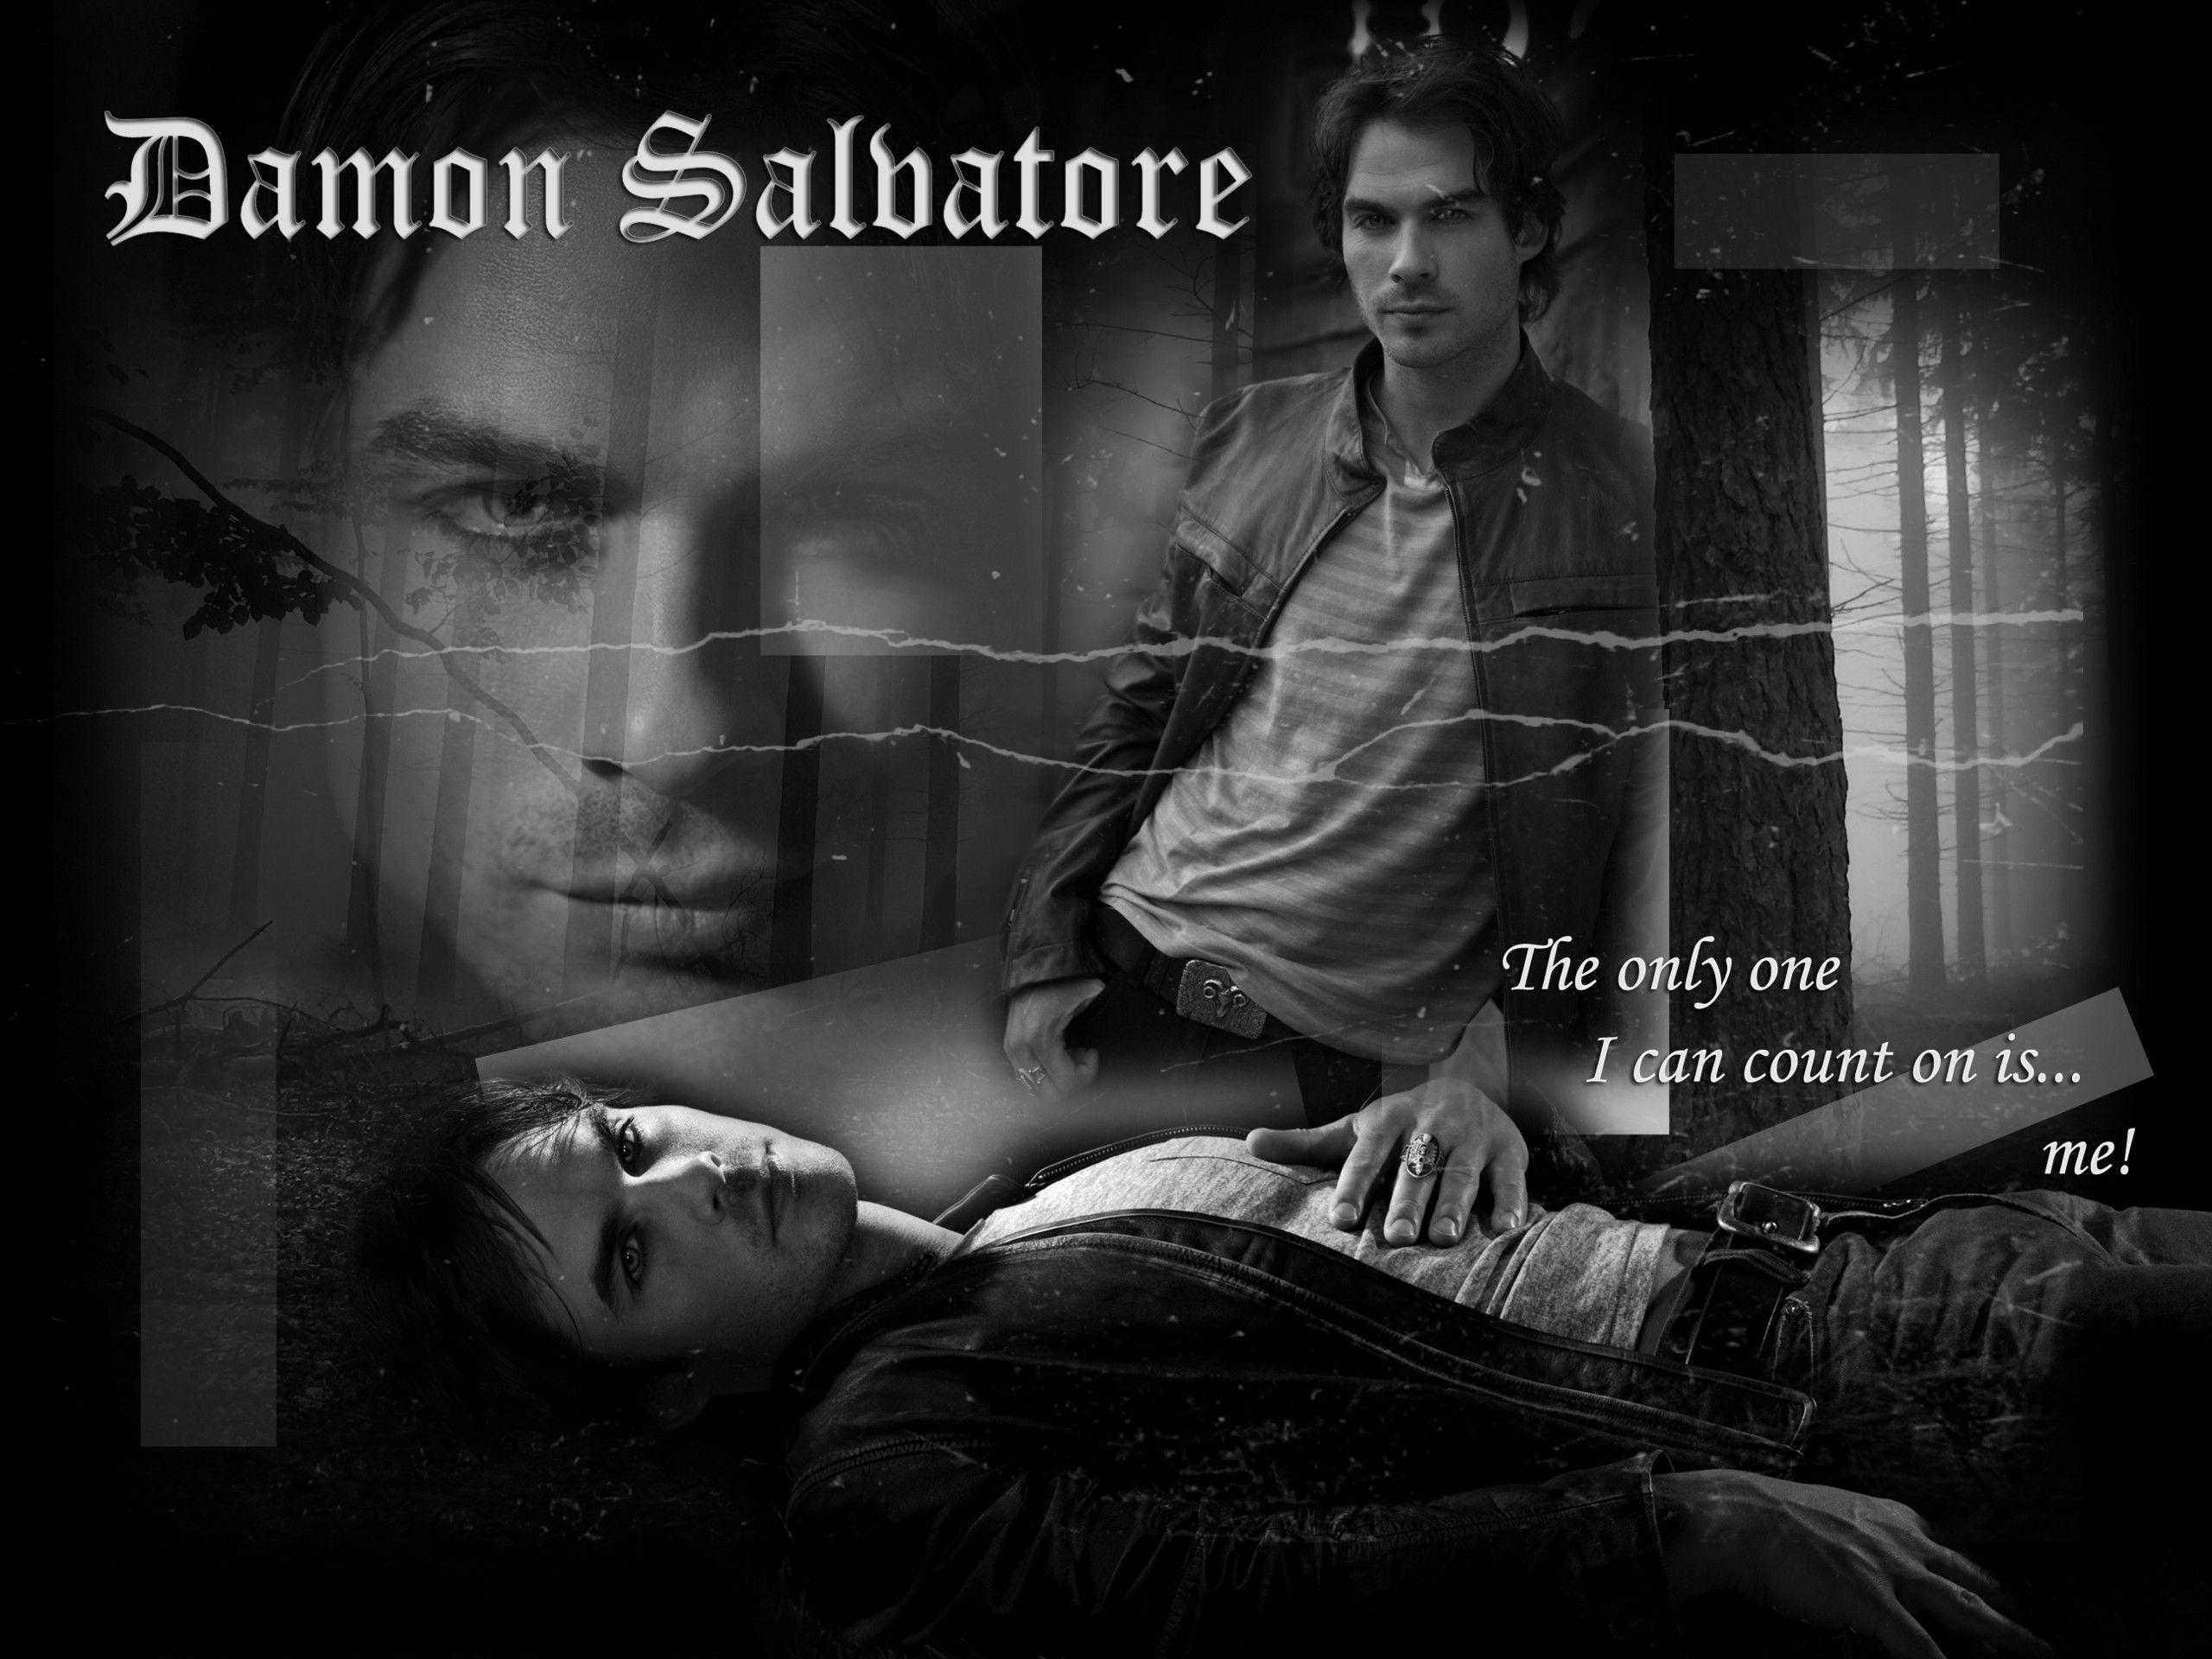 Damon Salvatore Wallpaper